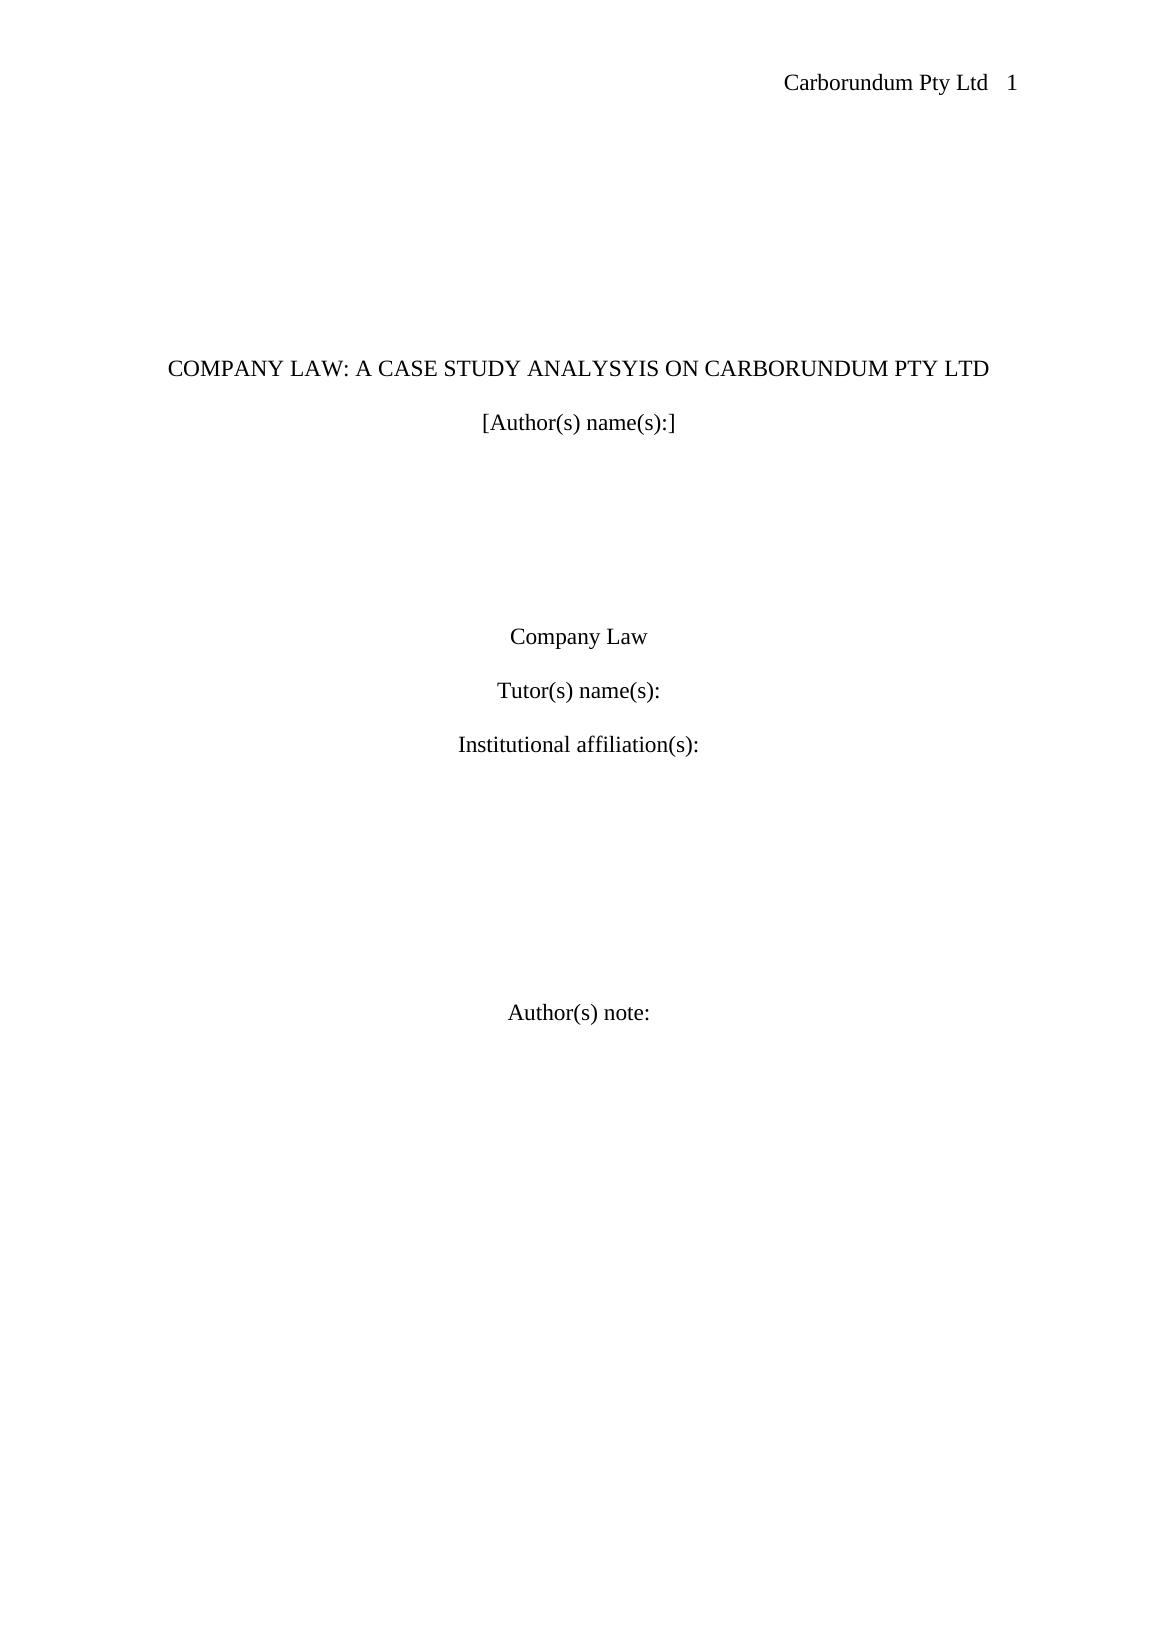 Case Study Analysis of Carborundum Pty Ltd- Company Law_1